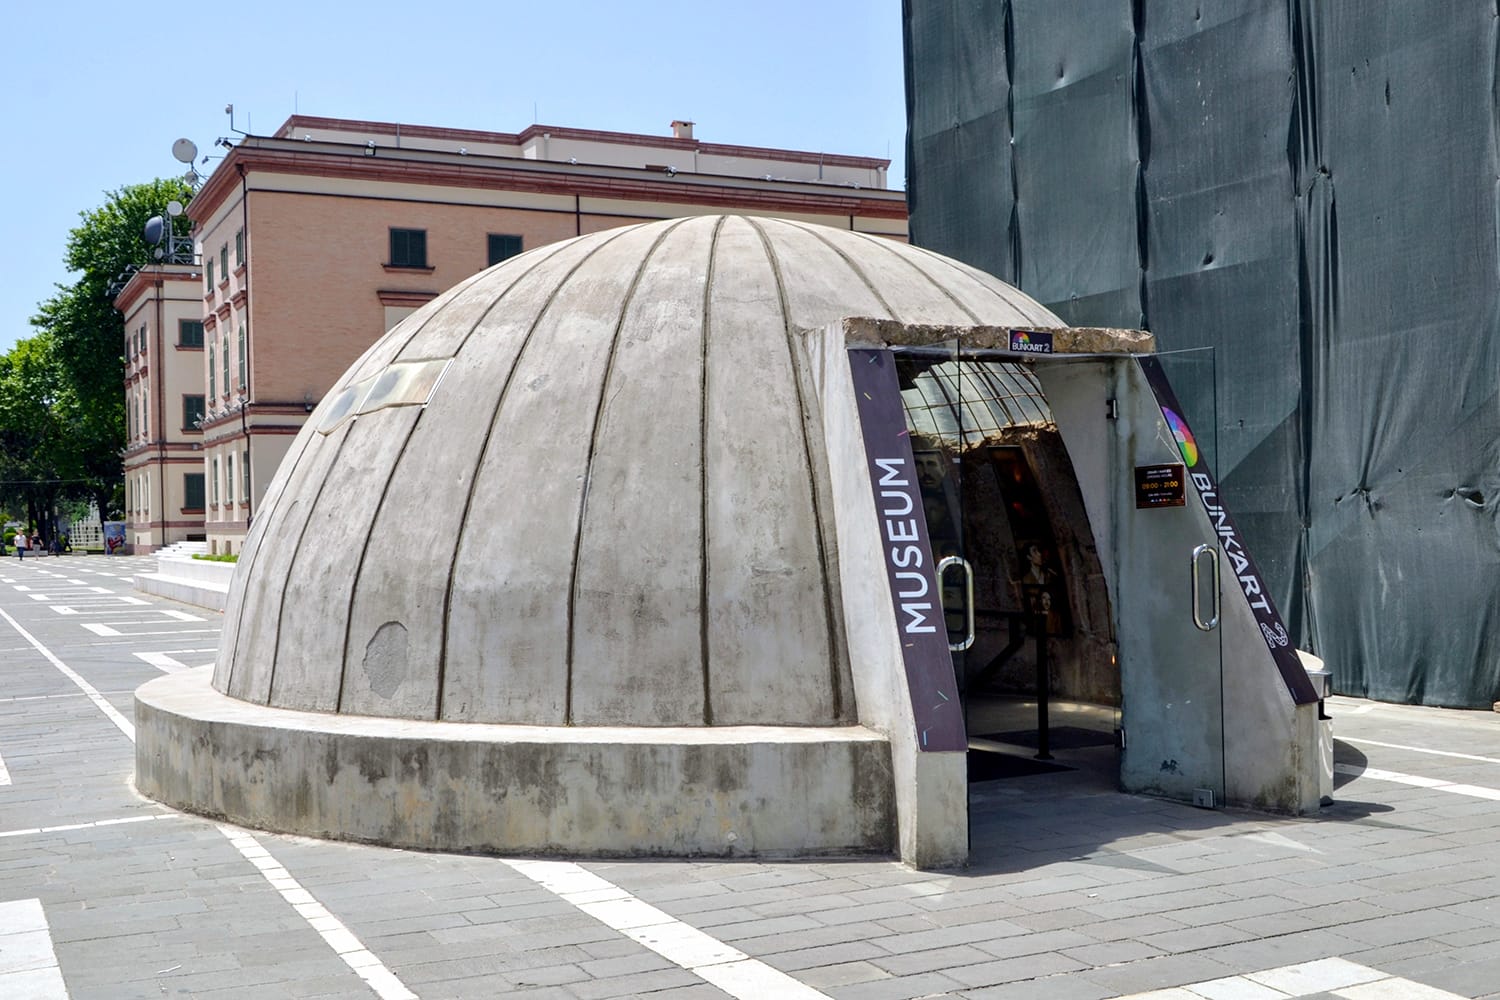 Bunkart 2, anti-nuclear bunker transformed into history museum in Tirana, Albania